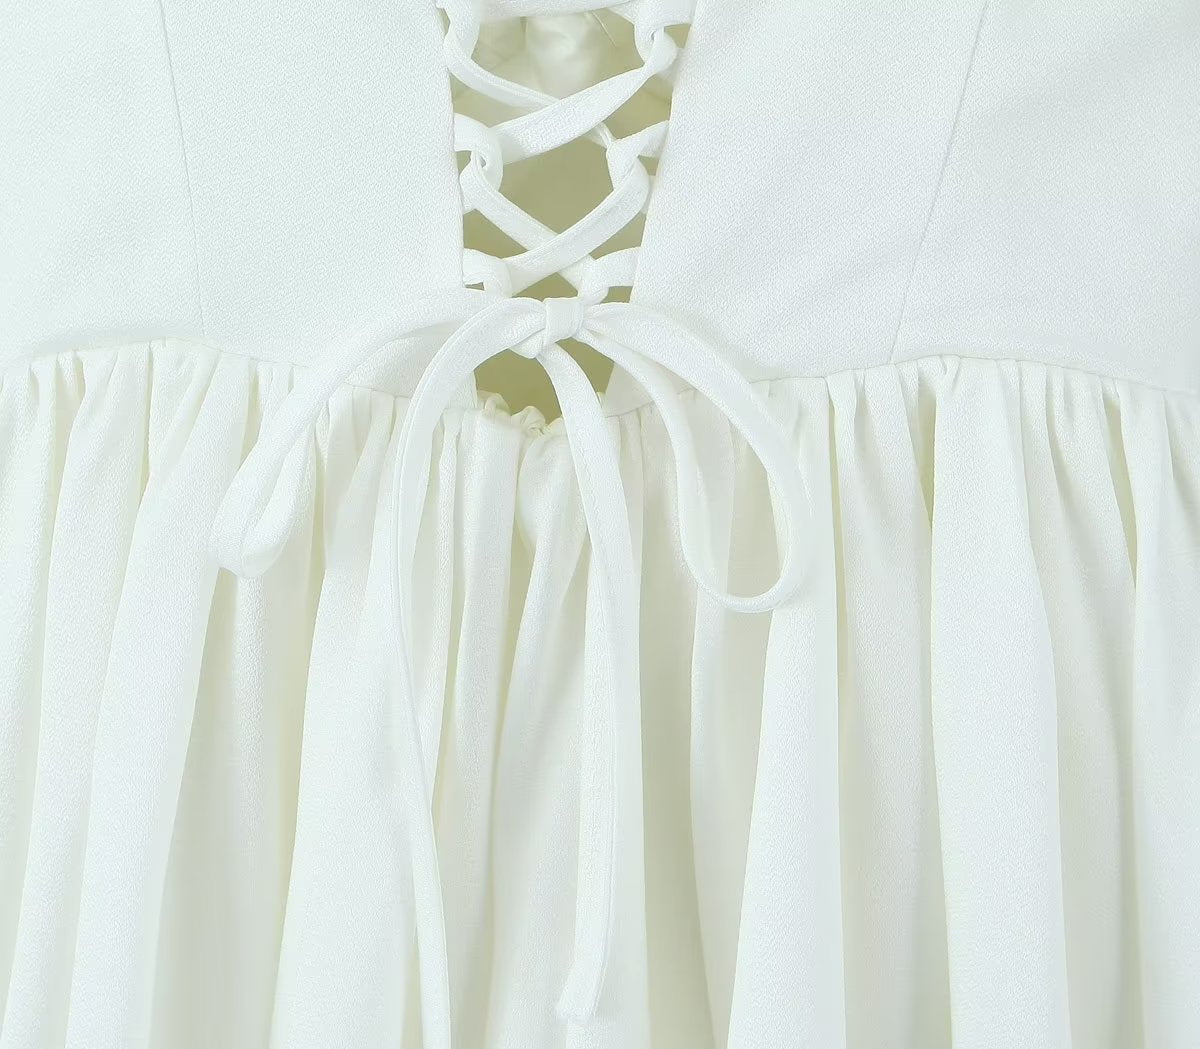 Summer Outfits | Bride Effect Ruffles White Mini Dress